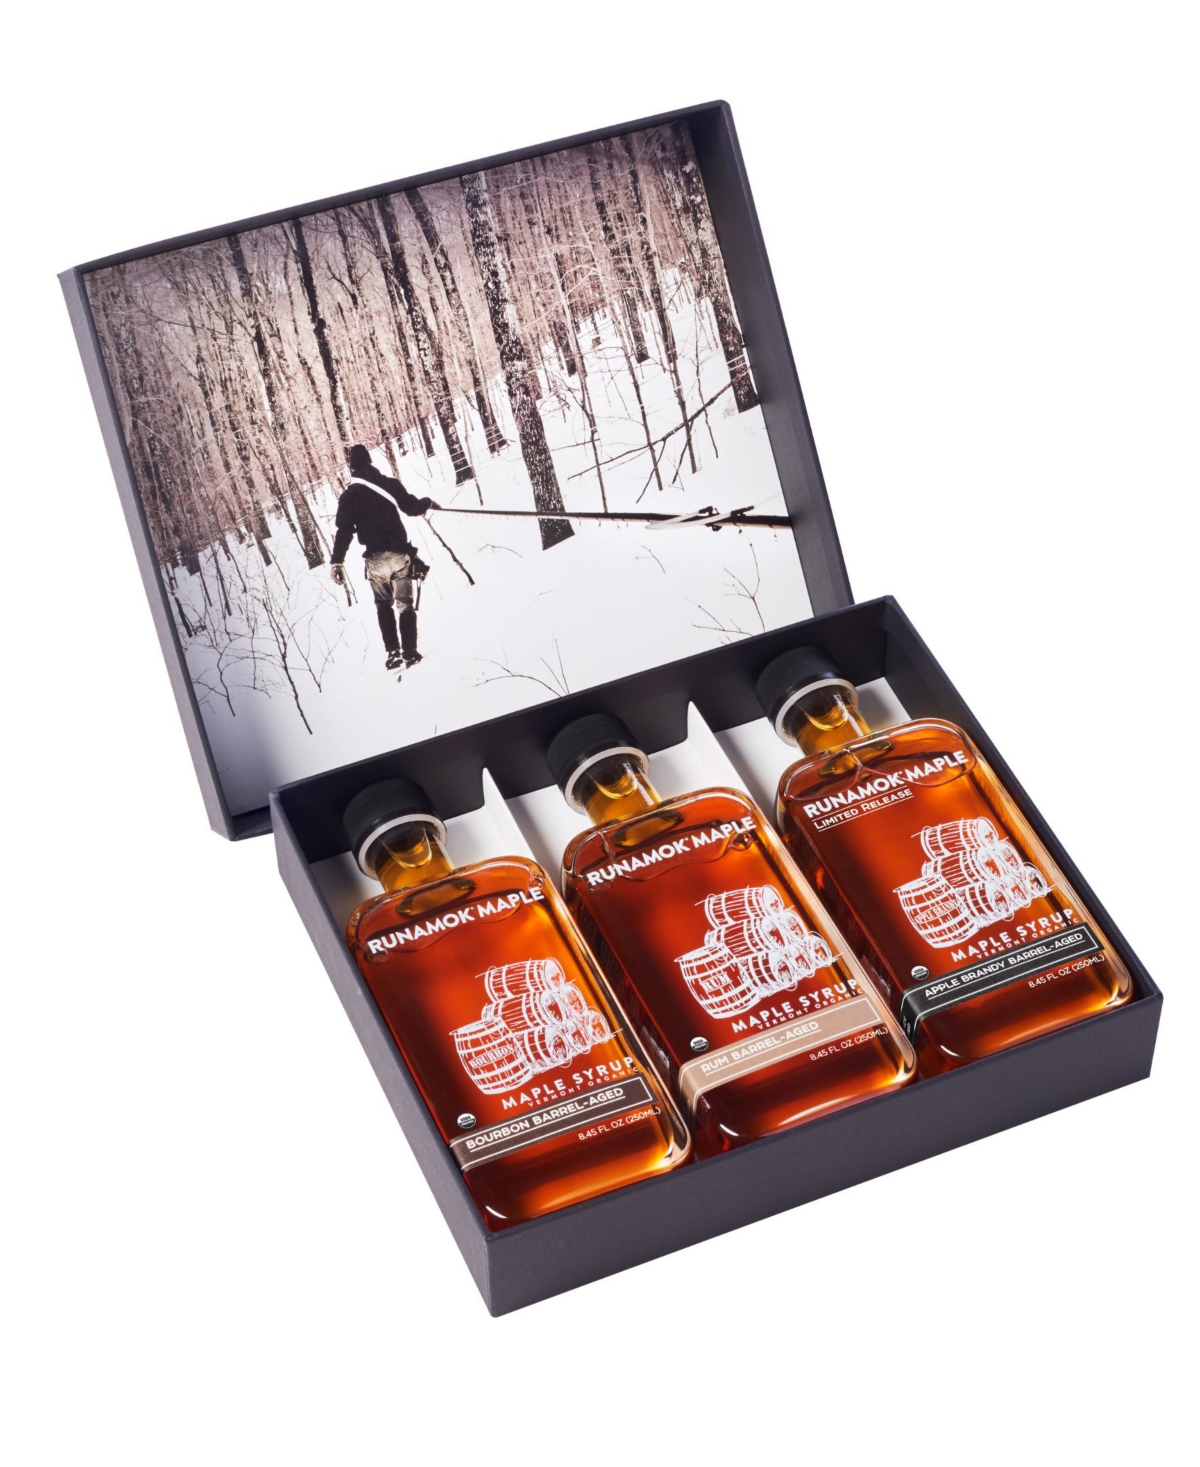 Runamok Maple 3-pc. Barrel-aged Maple Syrup Gift Box